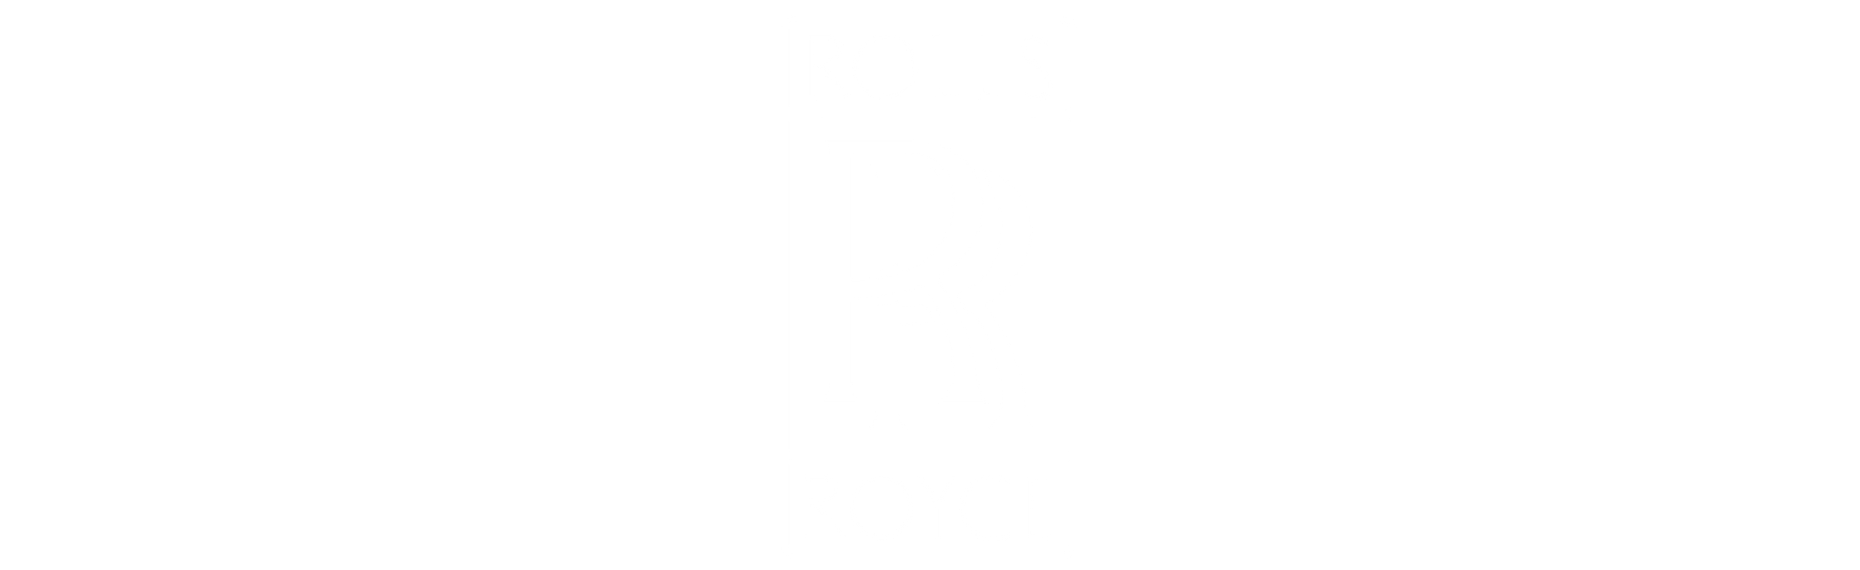 rolls royce logo transparent white resized v3